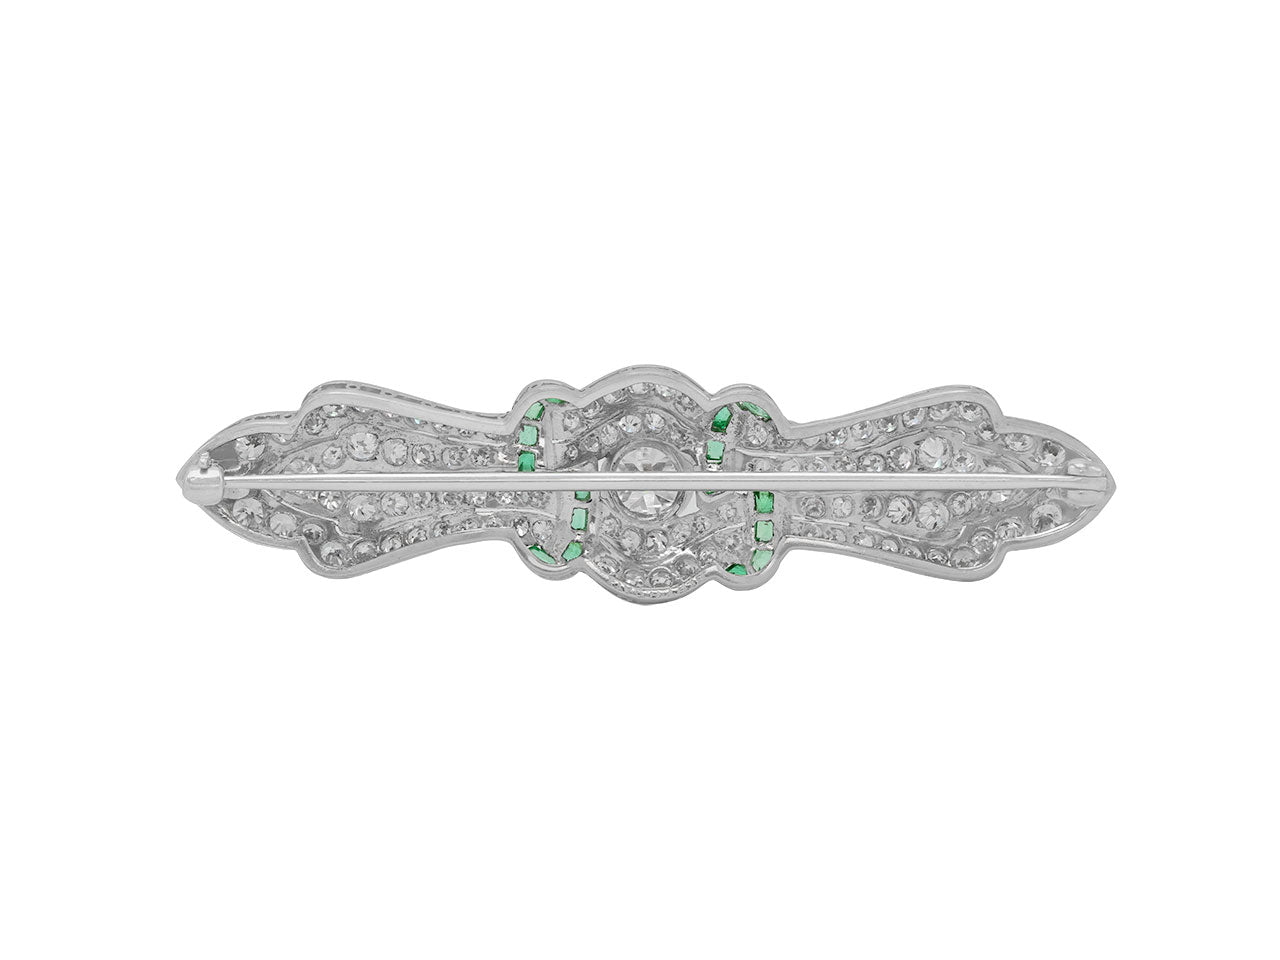 Art Deco Emerald and Diamond Brooch in Platinum